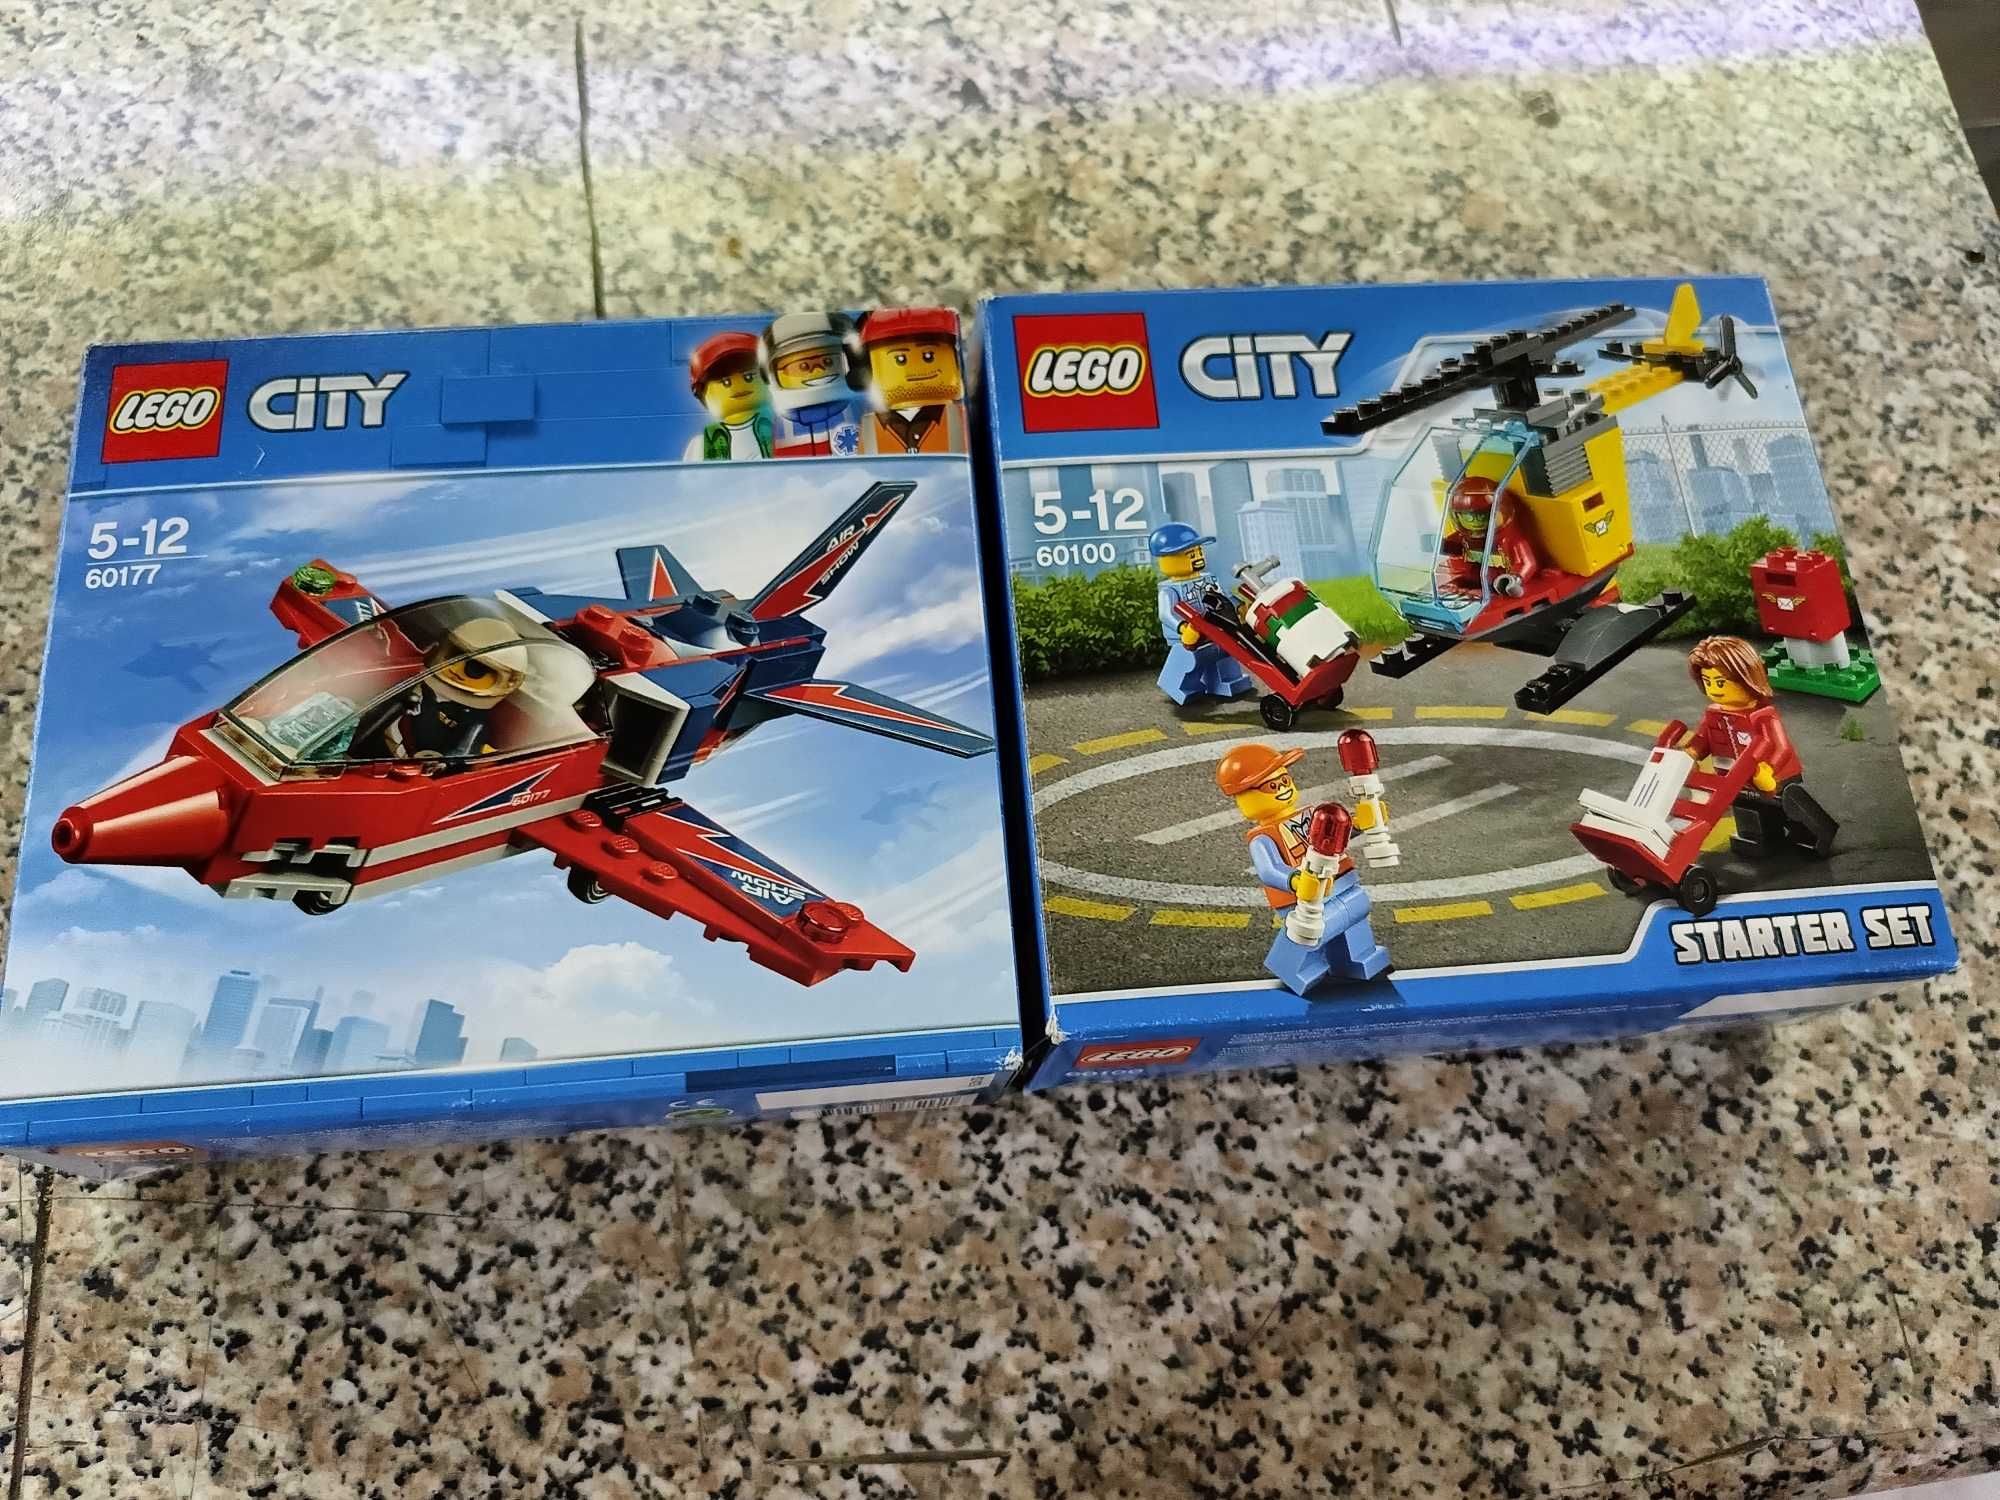 Lego city 60177 i 60100